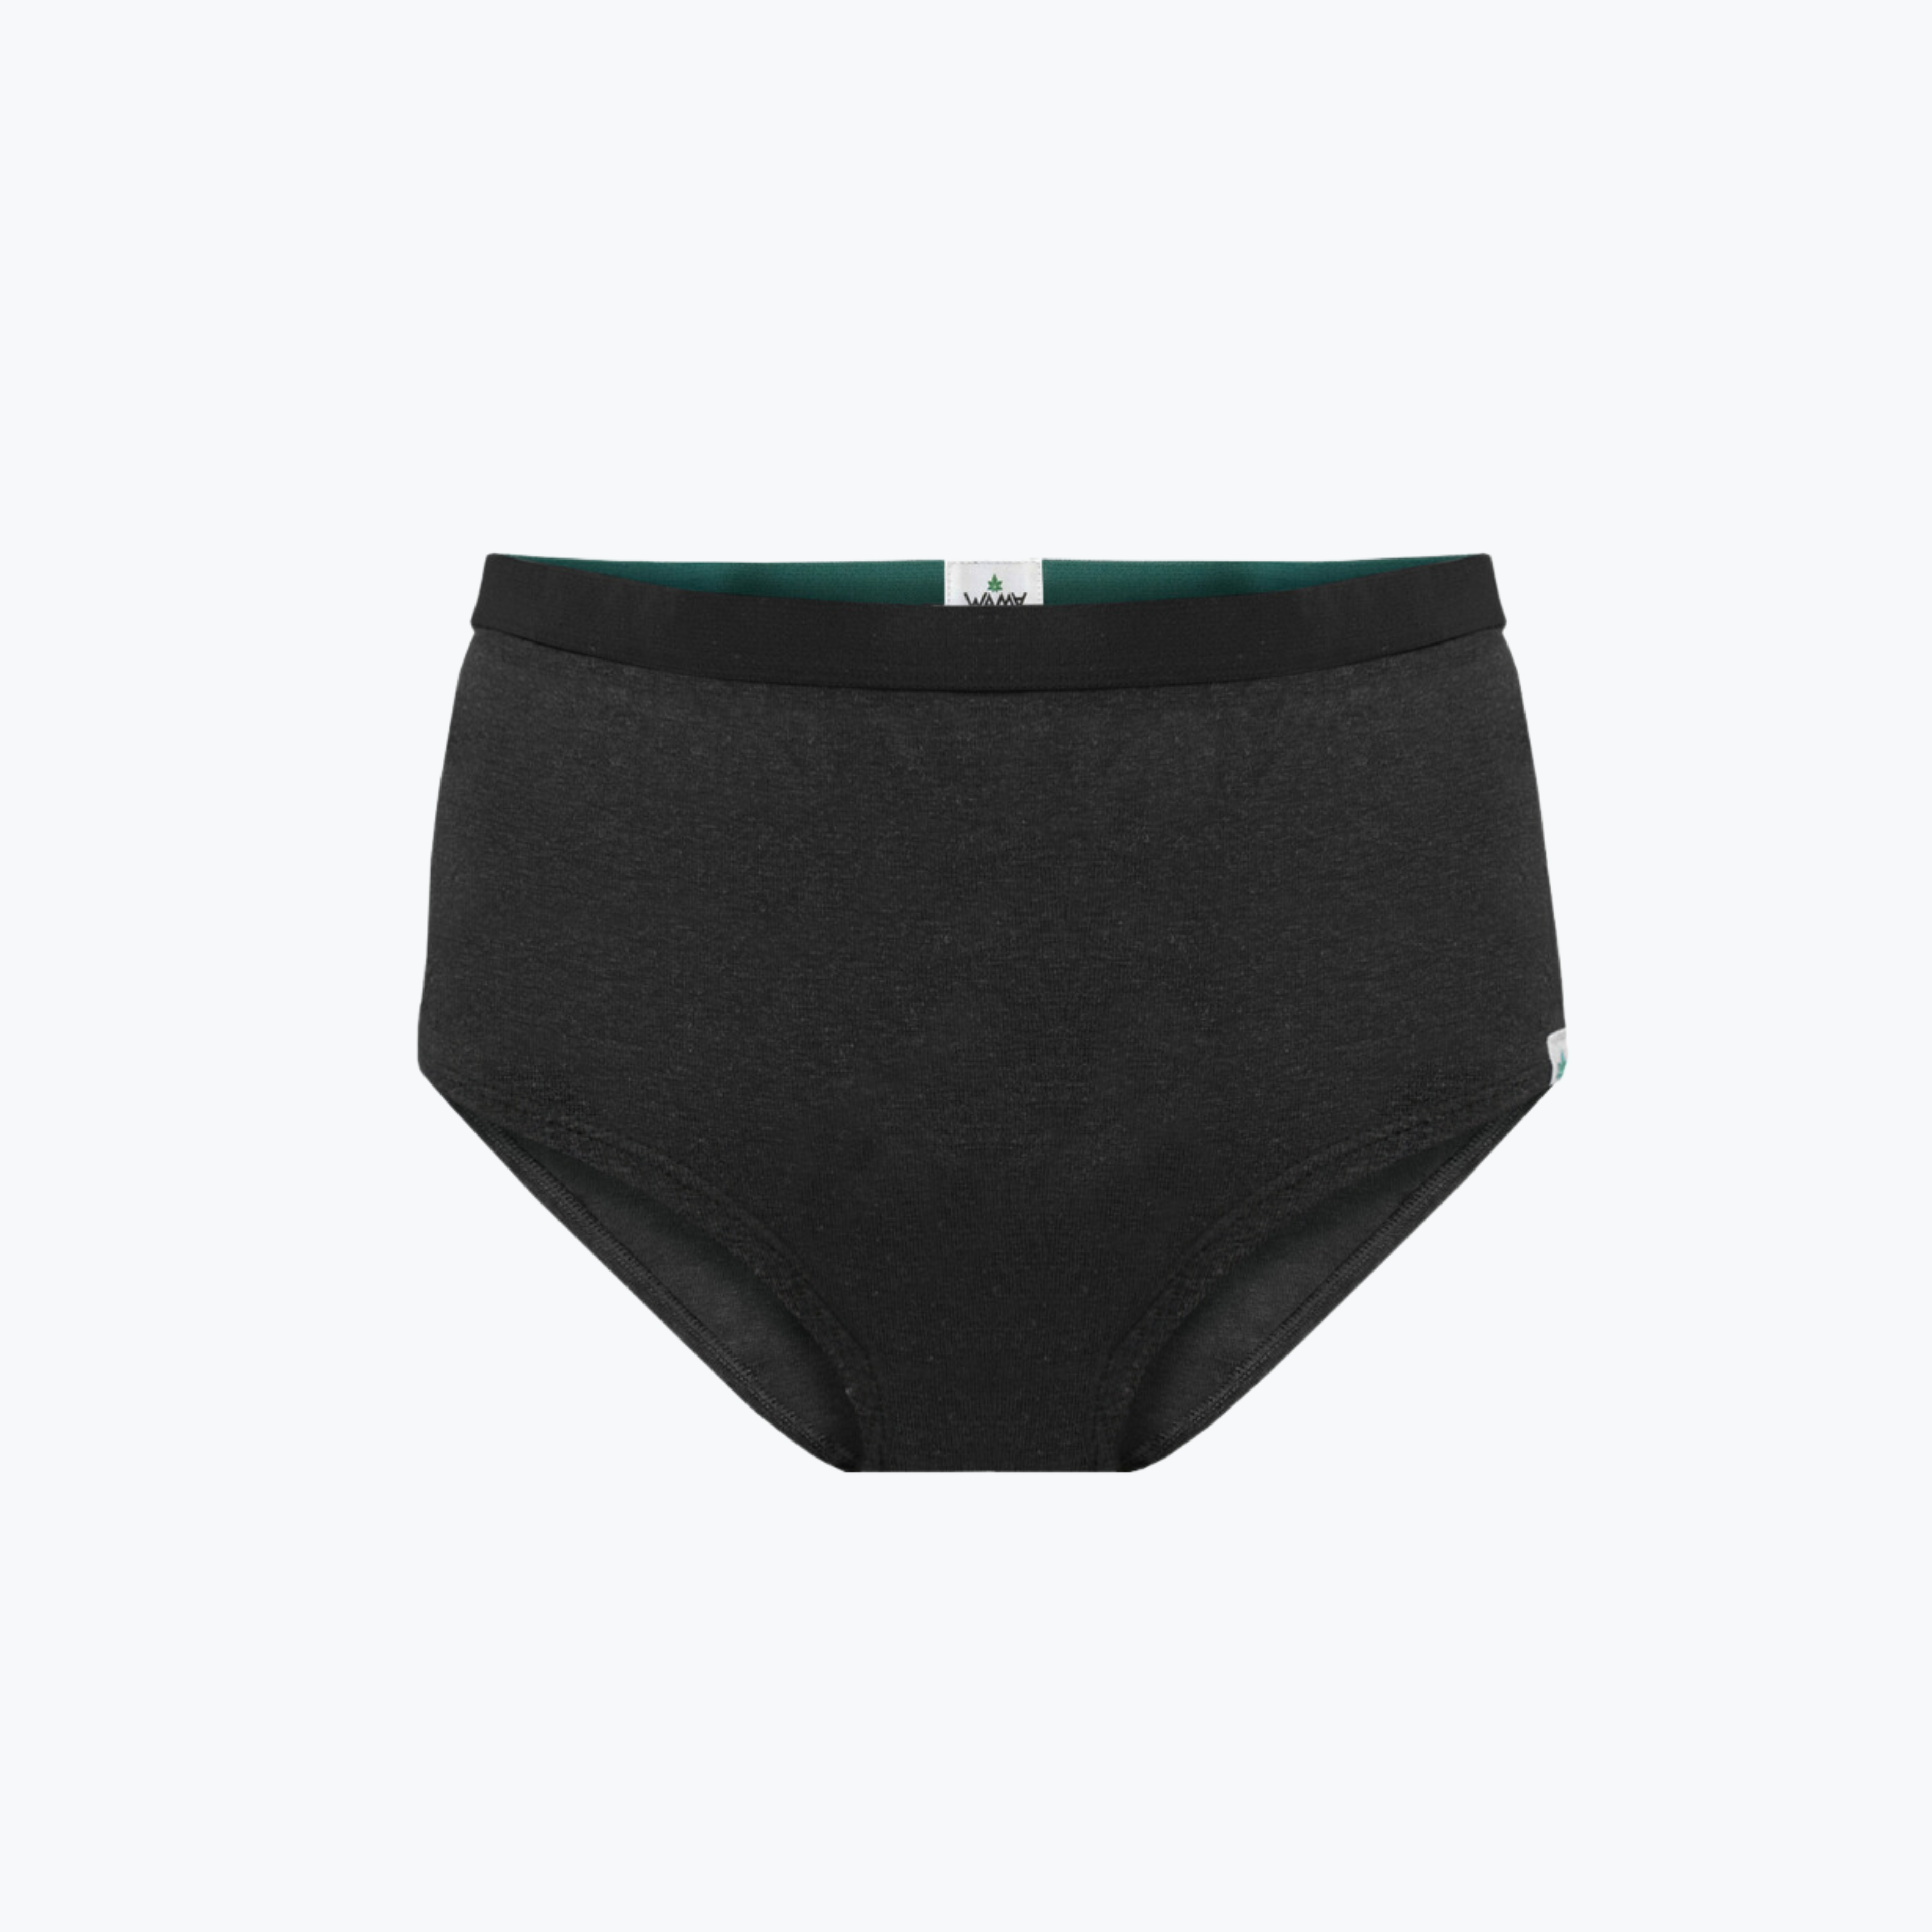 Capreze High Waist Underpants Solid Color Lingerie for Women Comfy Full  Coverage Underwear Sleep Boxer Briefs Nude Color M